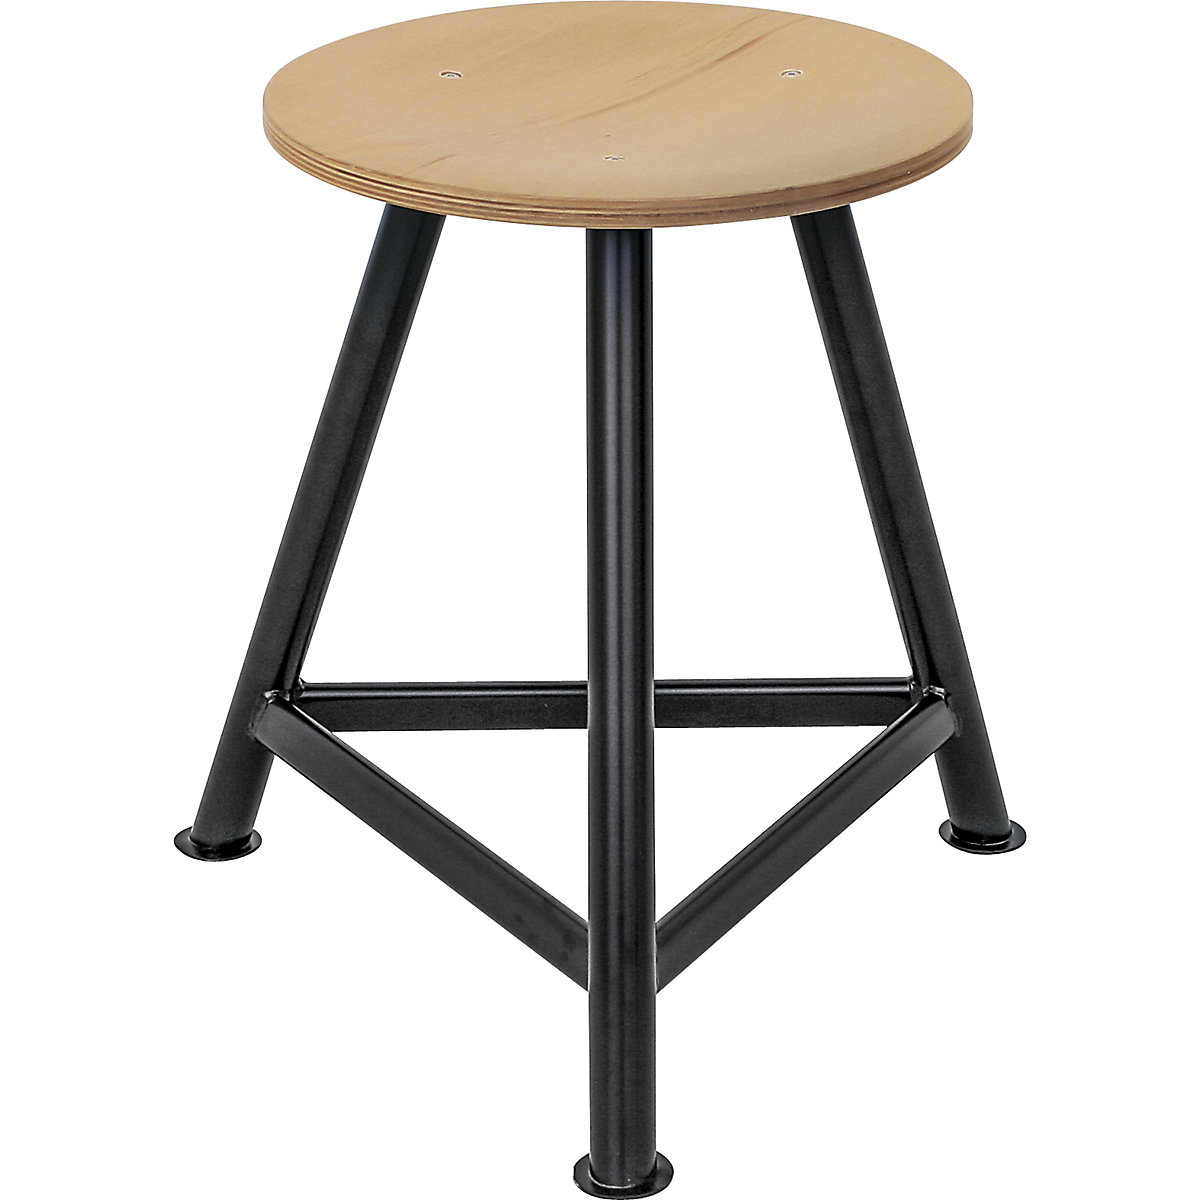 Workshop stool, beech plywood seat